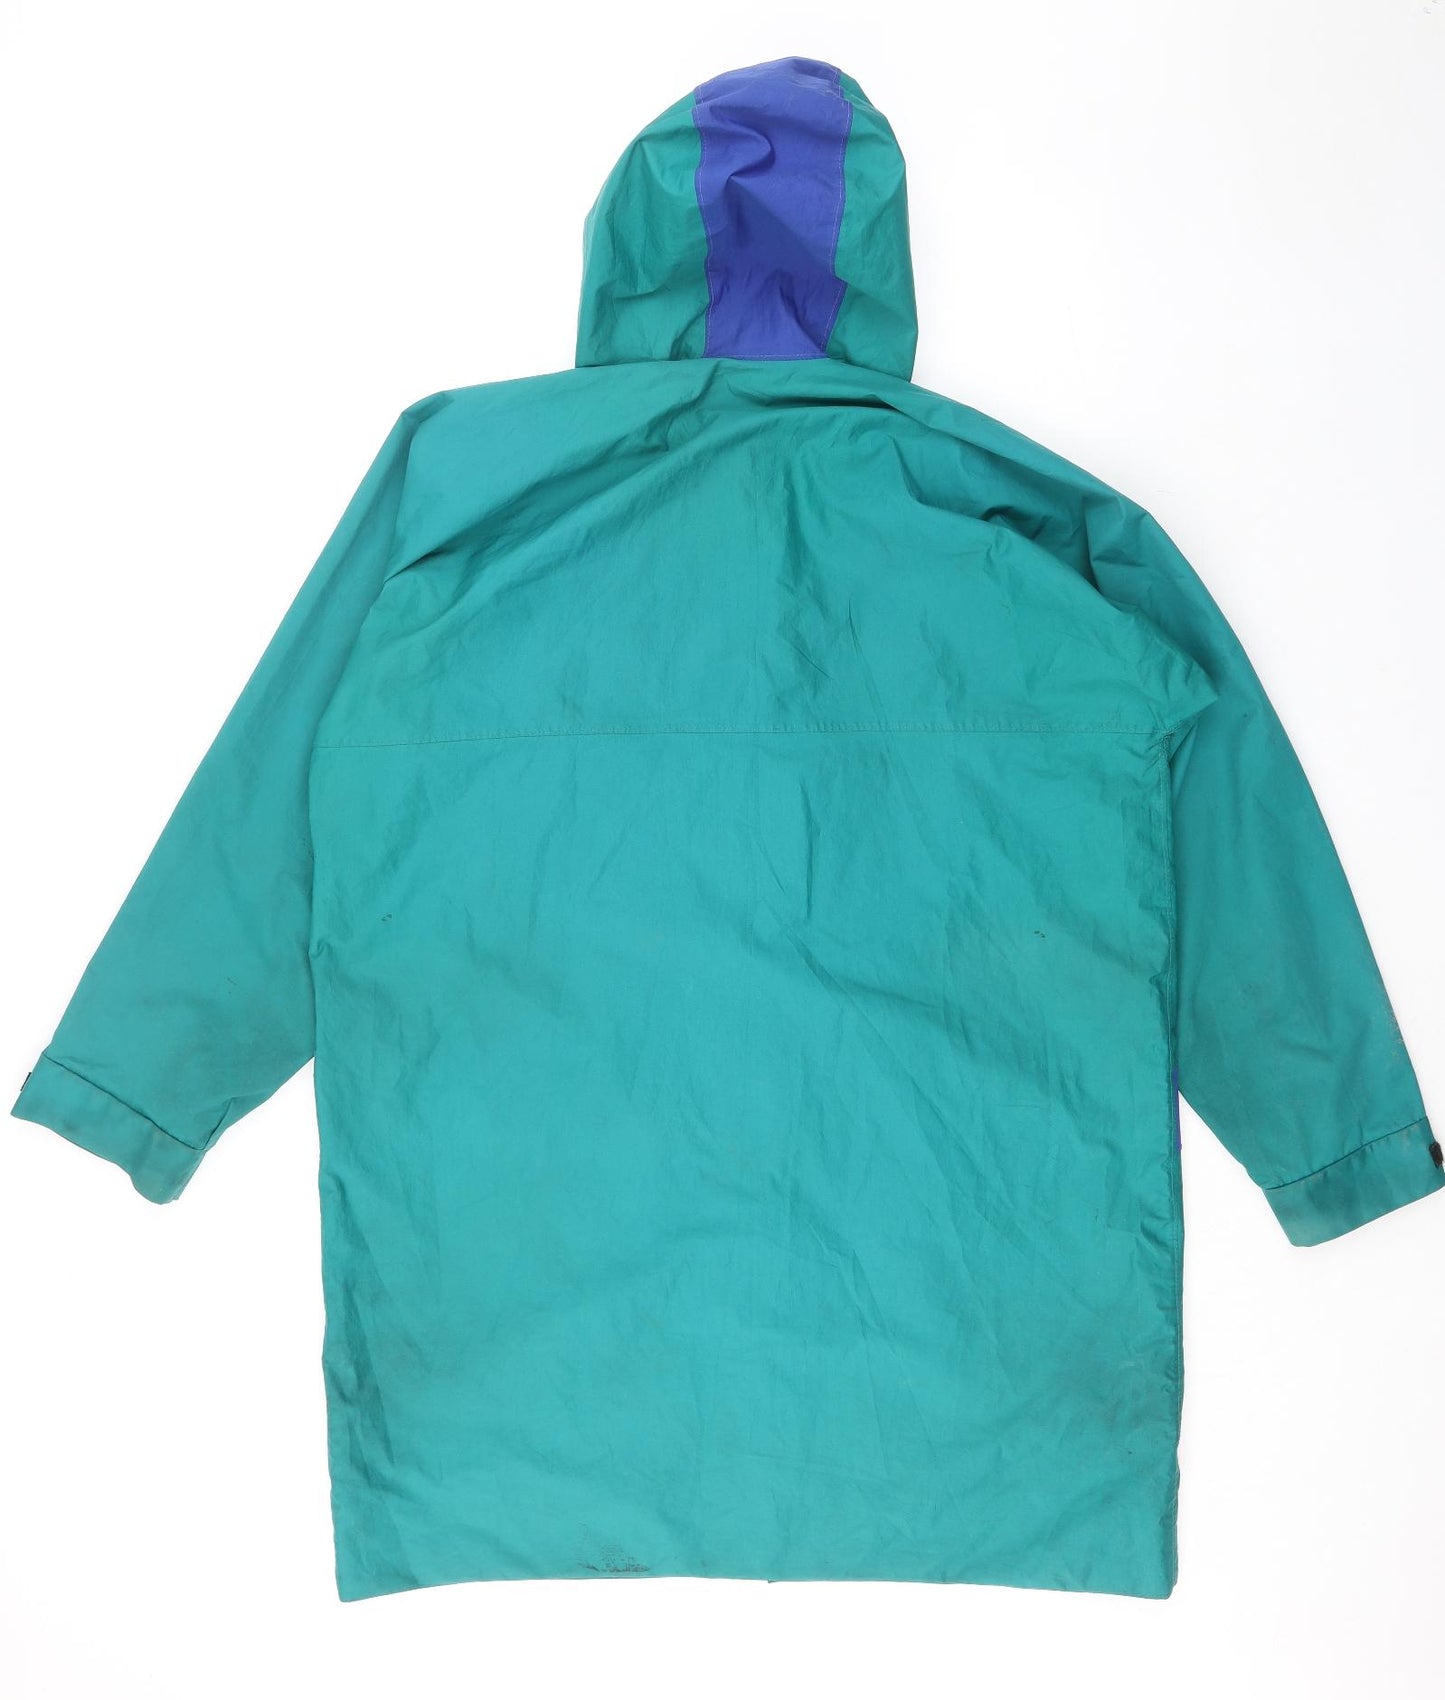 MILAIR Mens Green Rain Coat Jacket Size L Zip